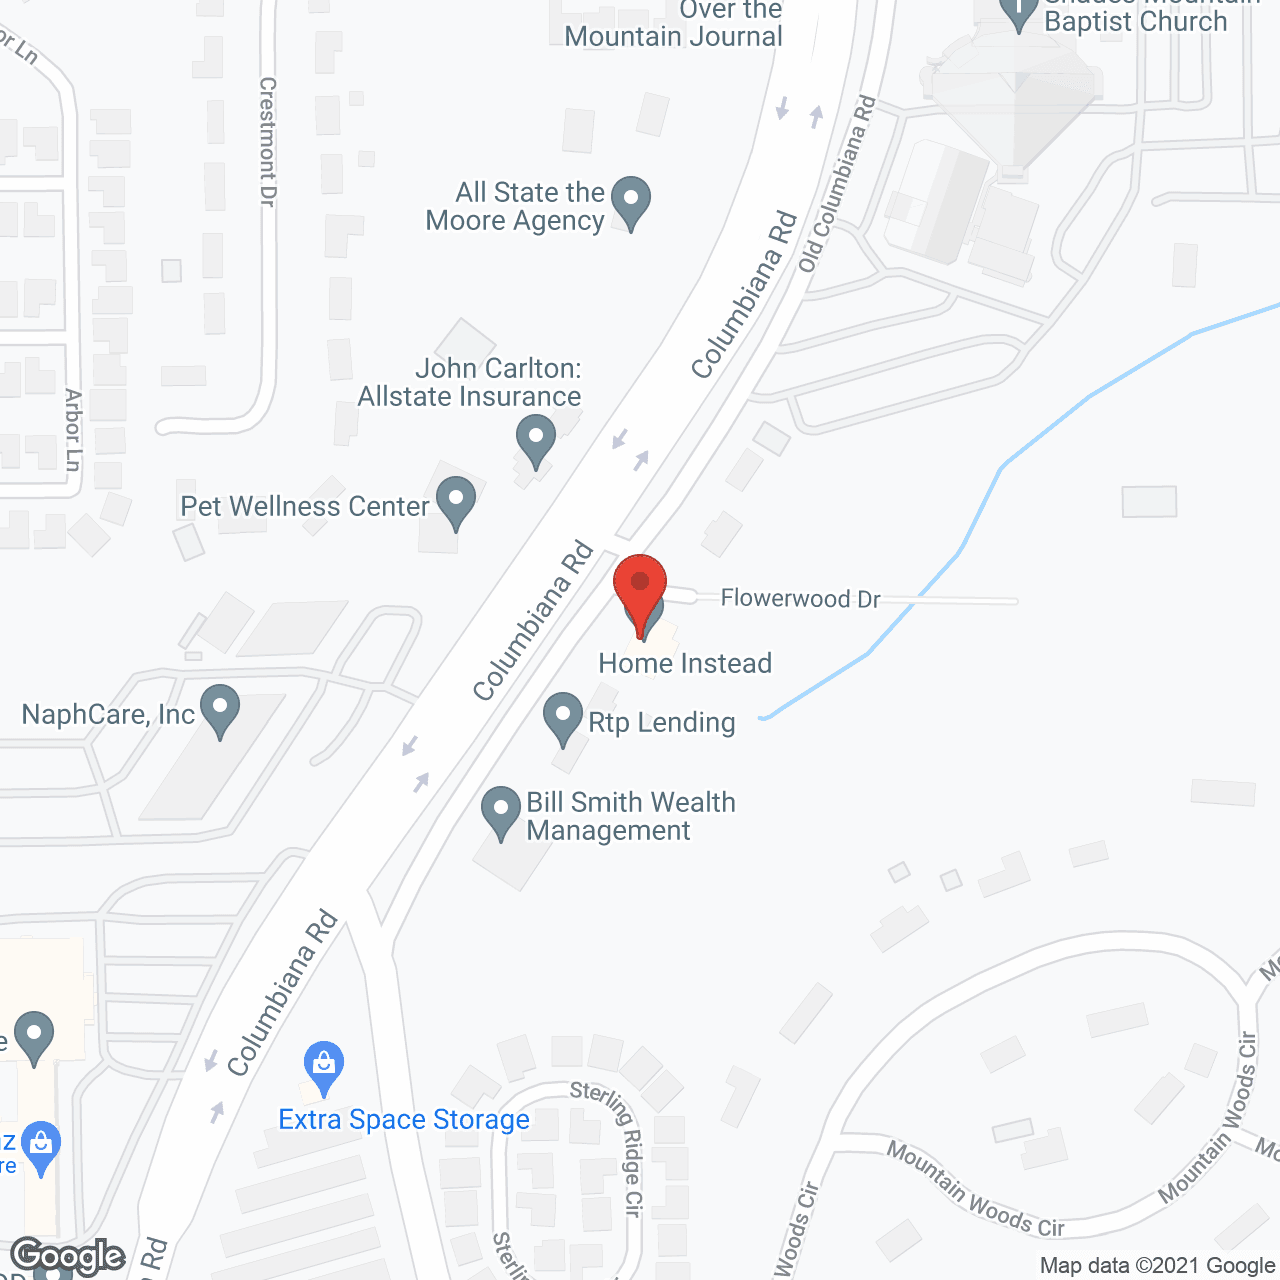 Home Instead - Birmingham, AL in google map